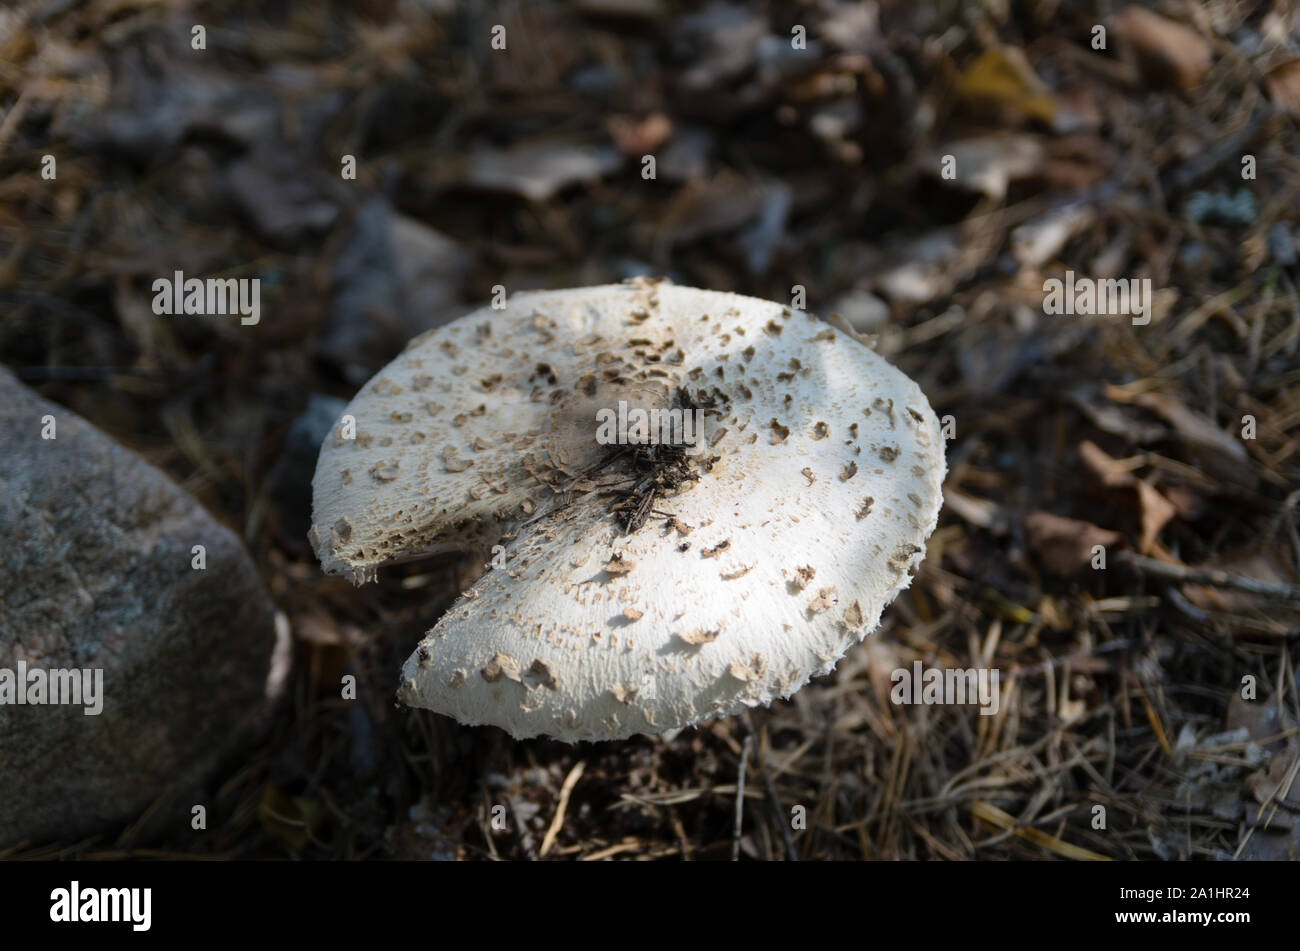 Cracked mushroom. Stock Photo